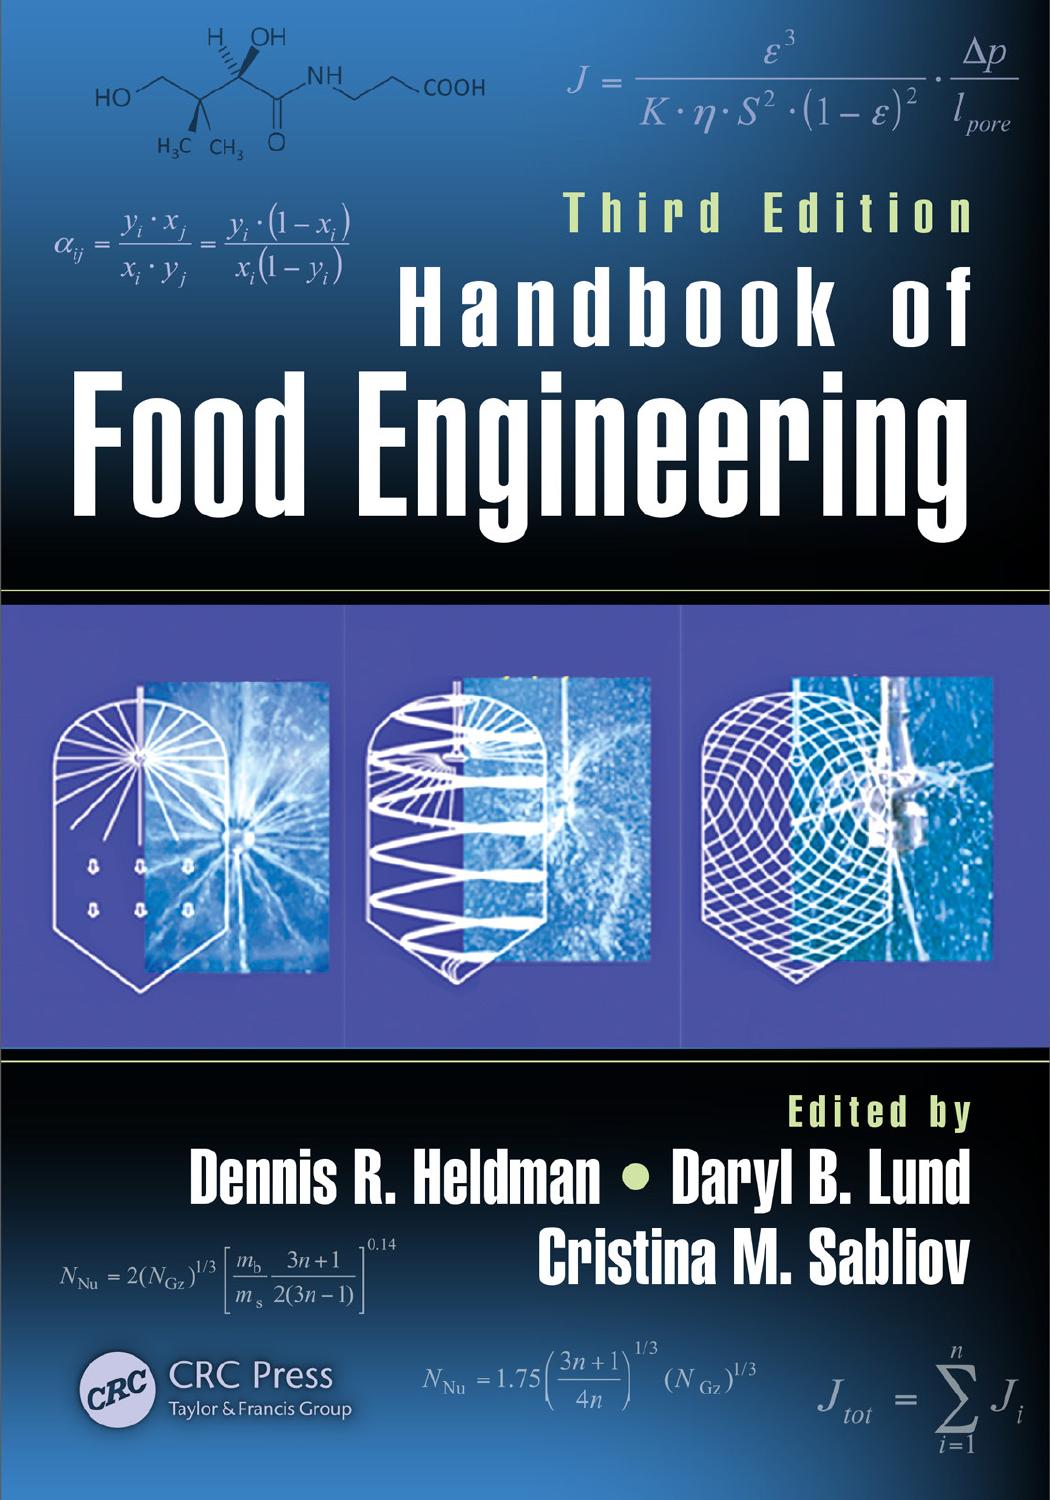 Handbook of food engineering-CRC Press Taylor & Francis Group (2019)